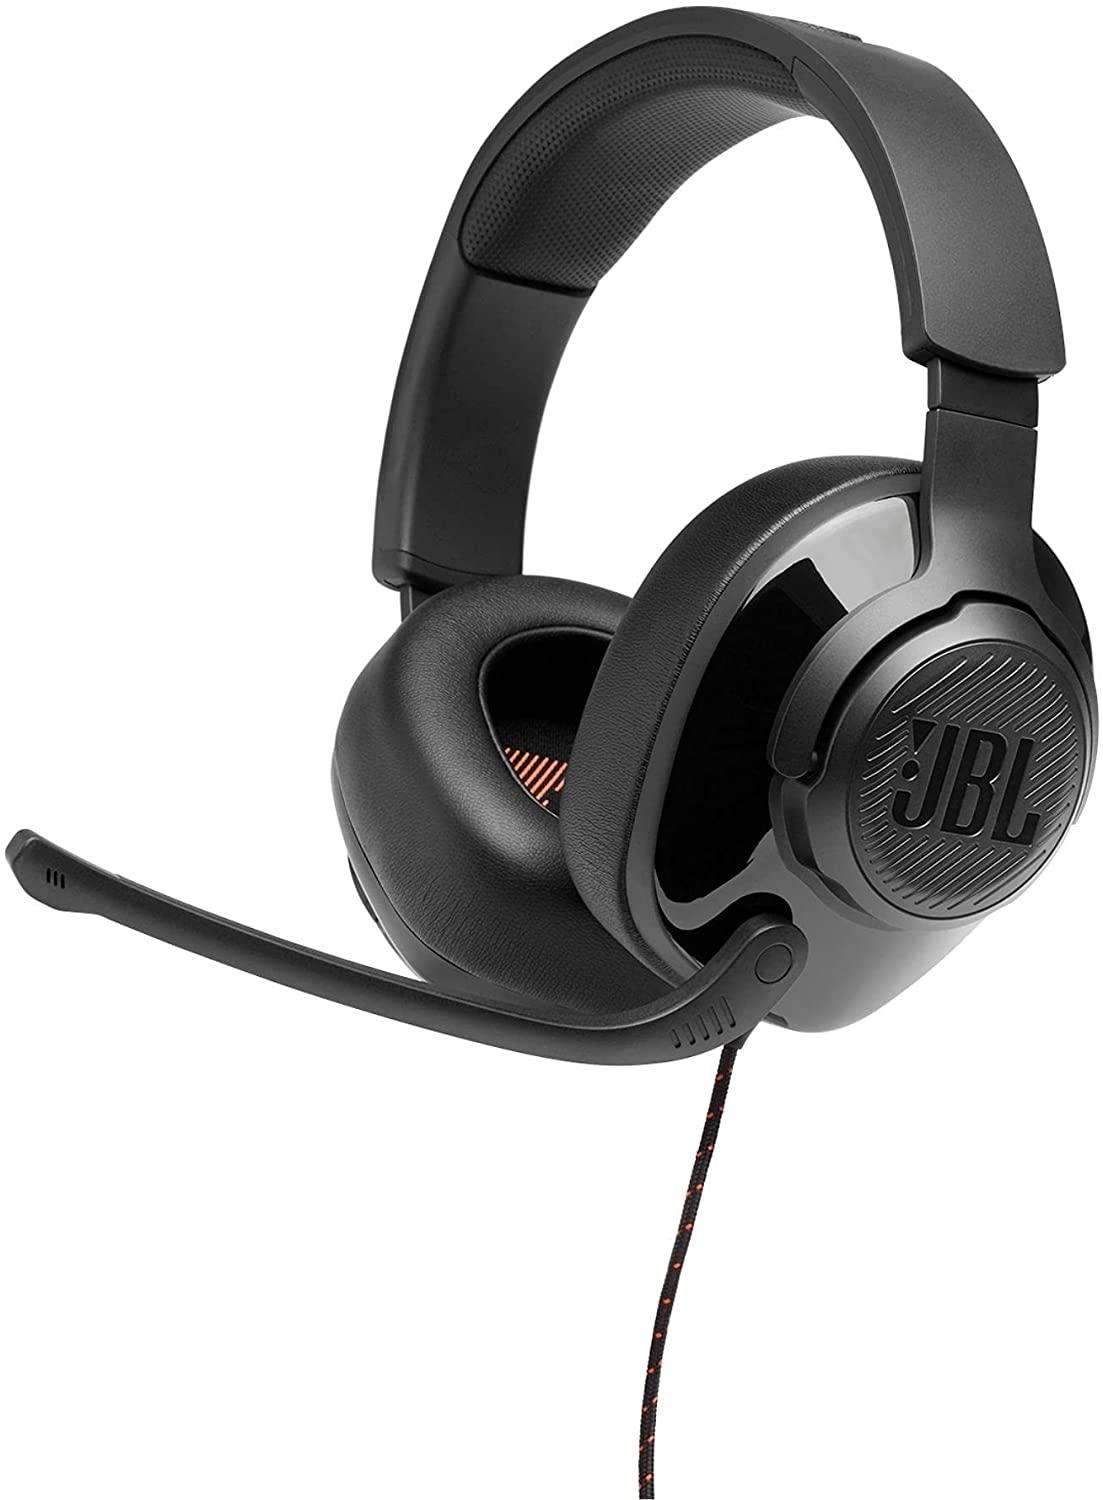 JBL Quantum 200 (Black) - Wired Over-Ear Gaming Headphone - GameStore.mt | Powered by Flutisat